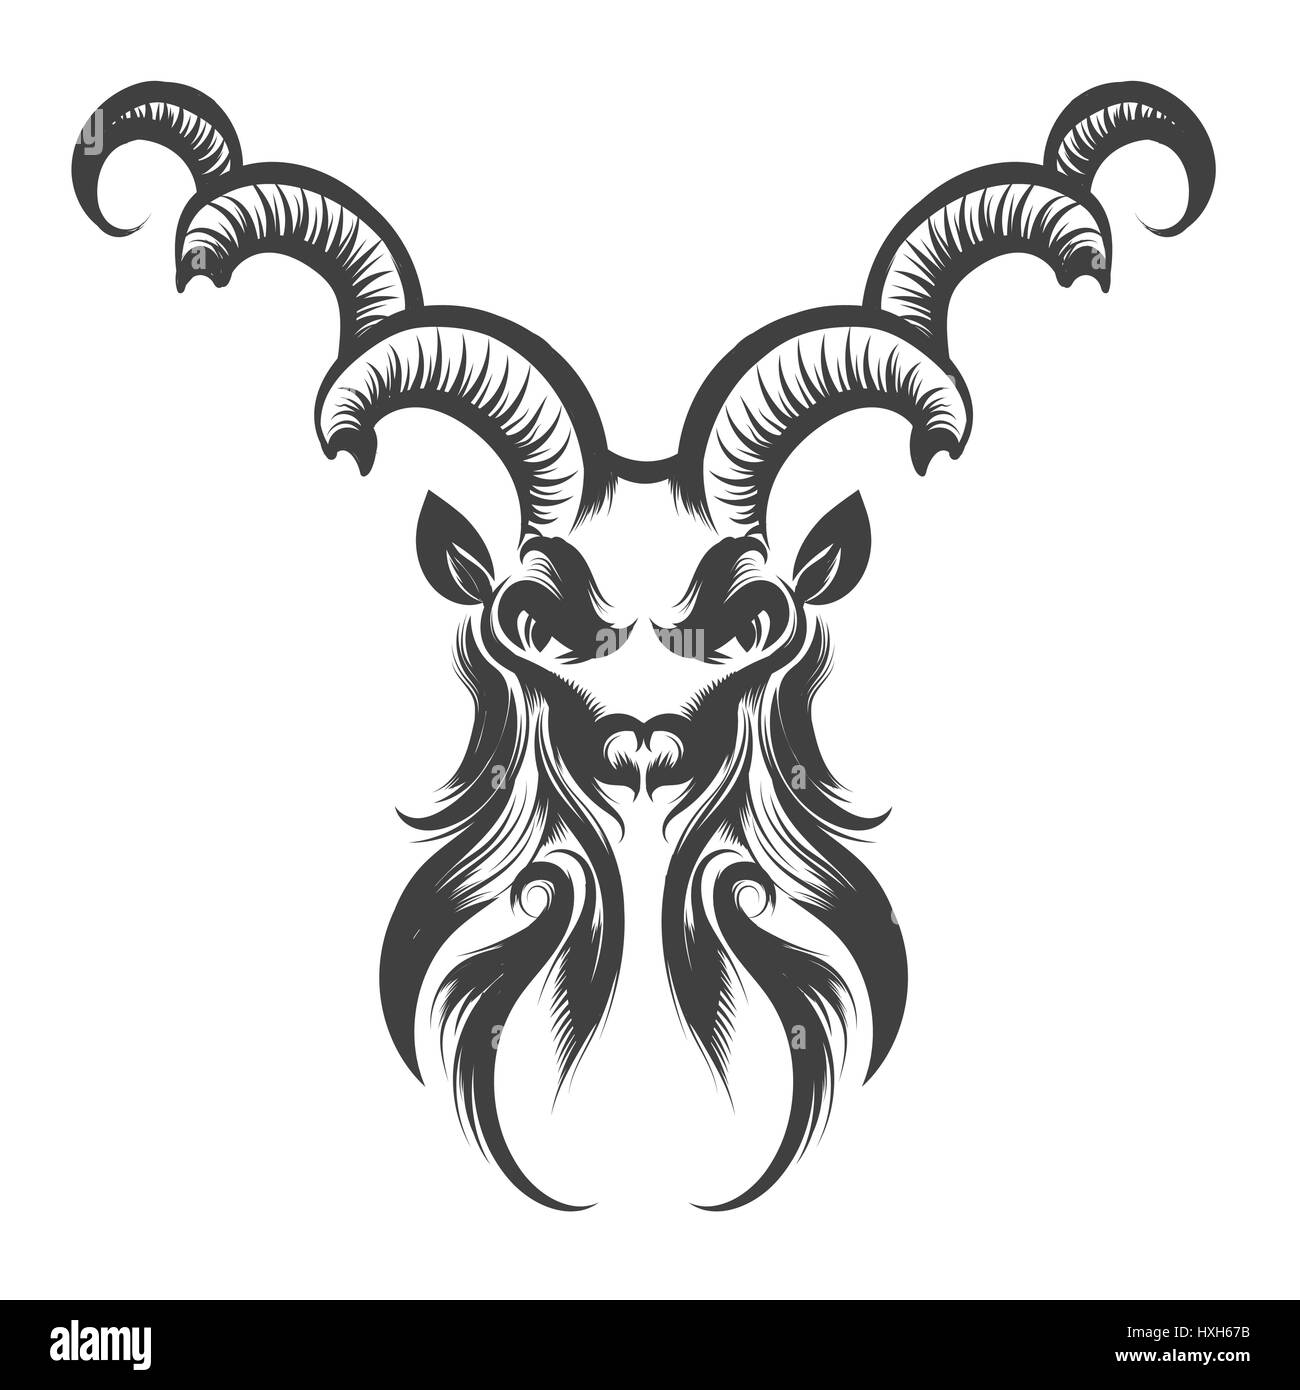 Symbol capricorn zodiac sign vector Black and White Stock Photos ...